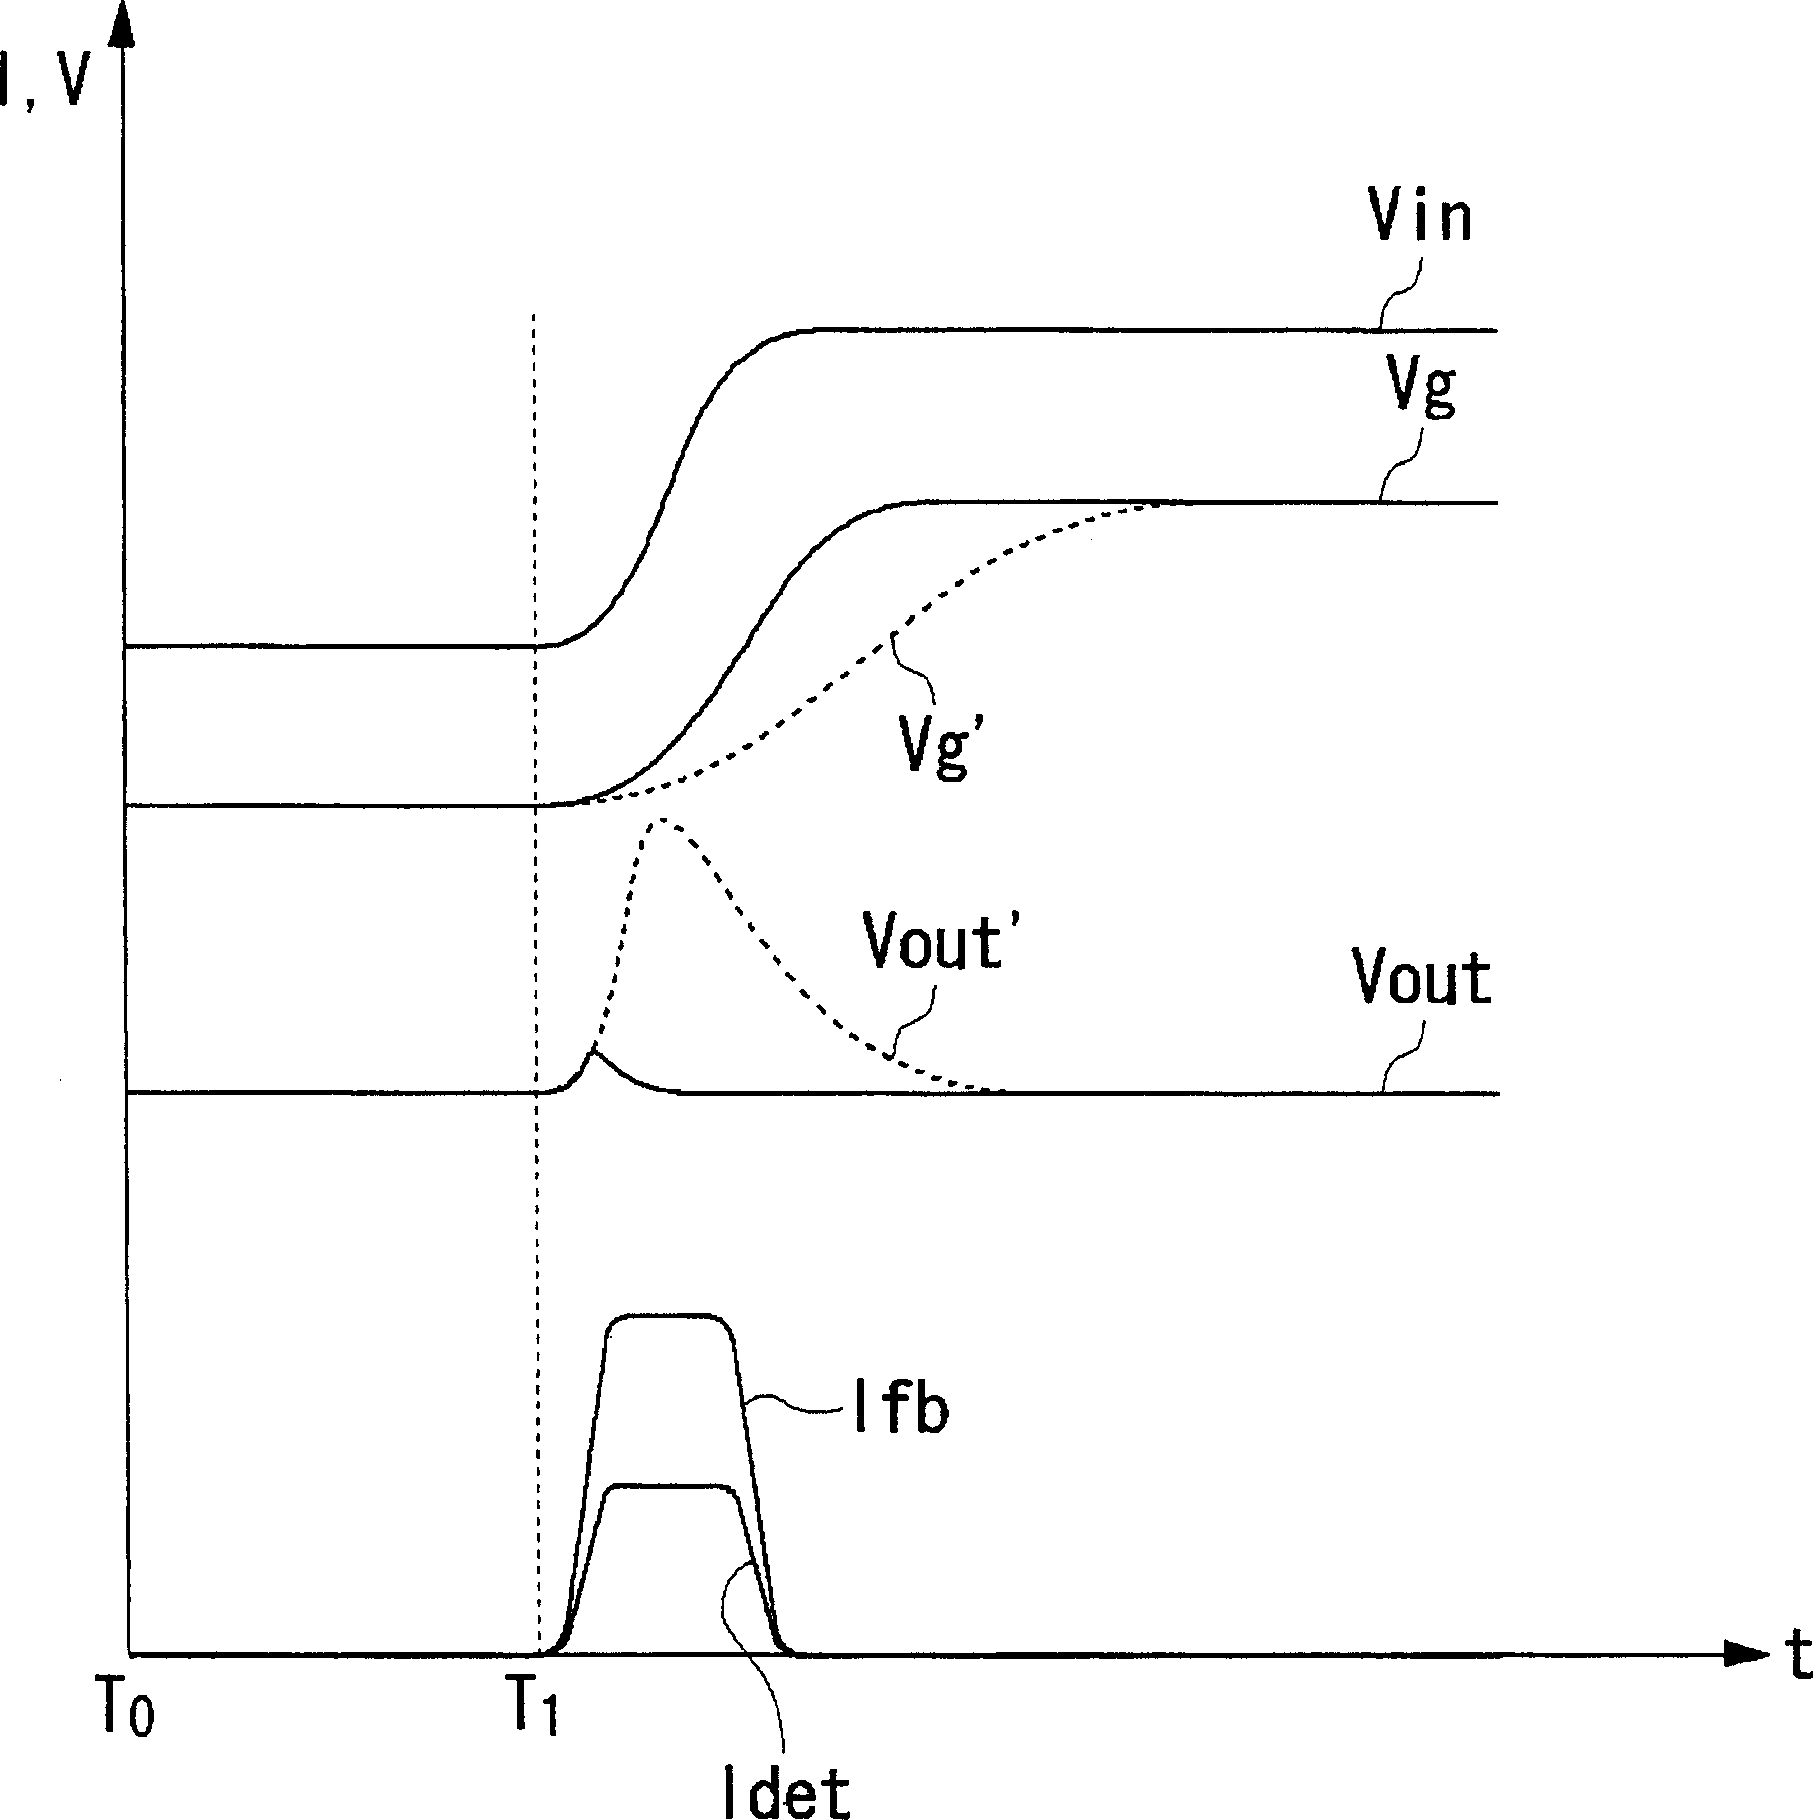 Regulator circuit capable of detecting variations in voltage